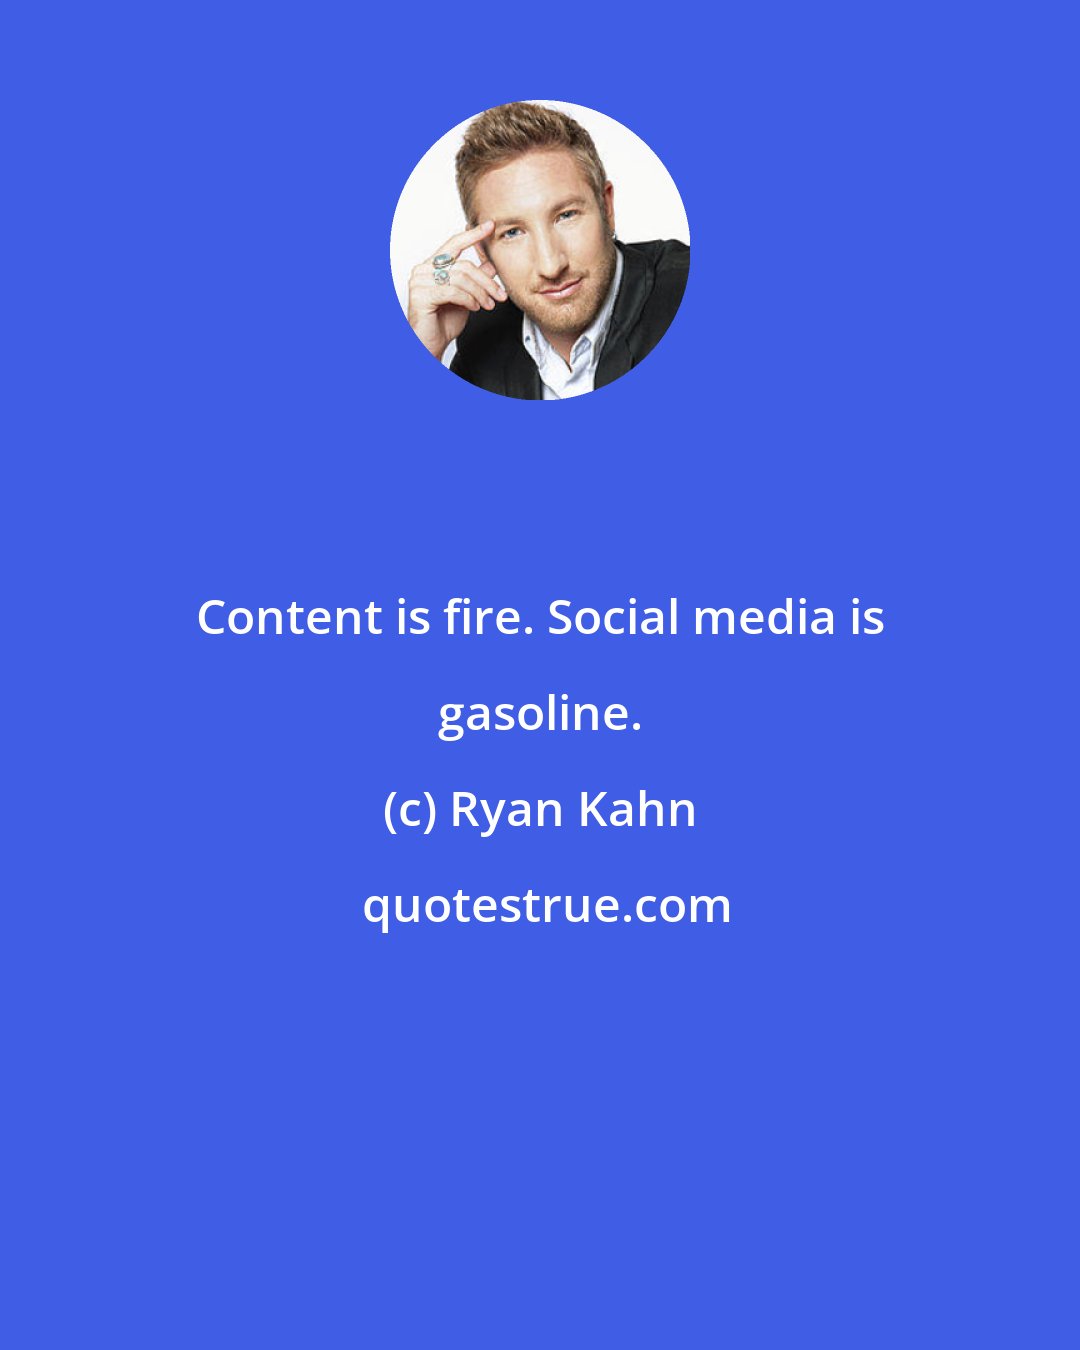 Ryan Kahn: Content is fire. Social media is gasoline.